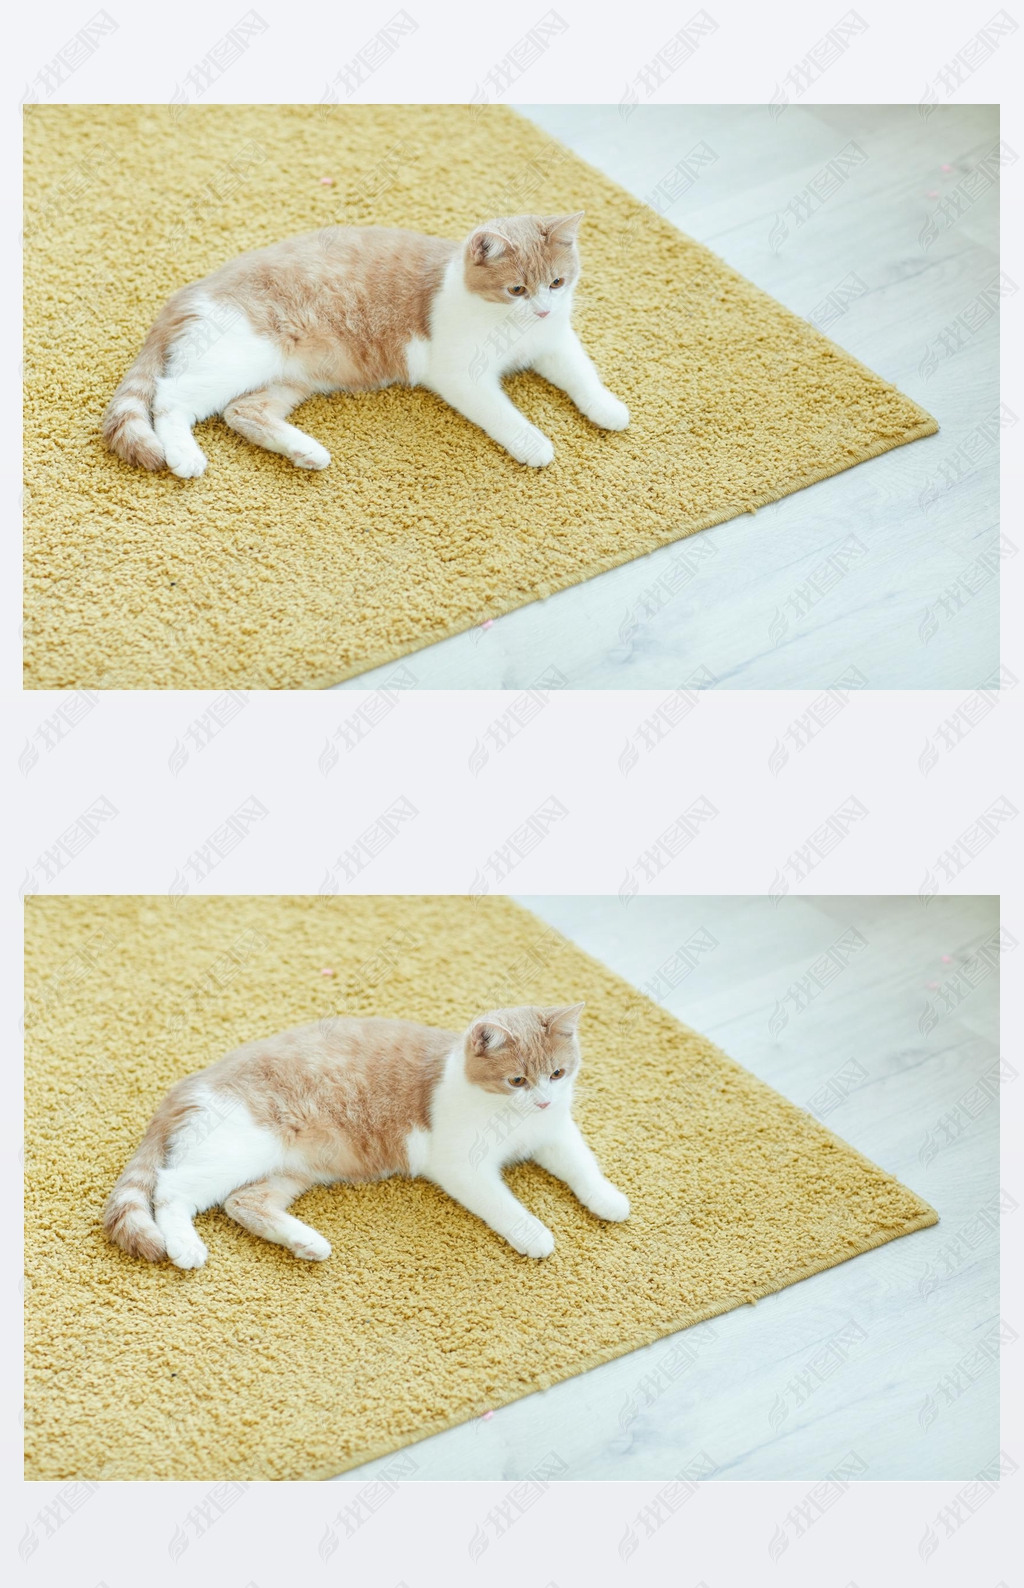 Cat resting on the carpet